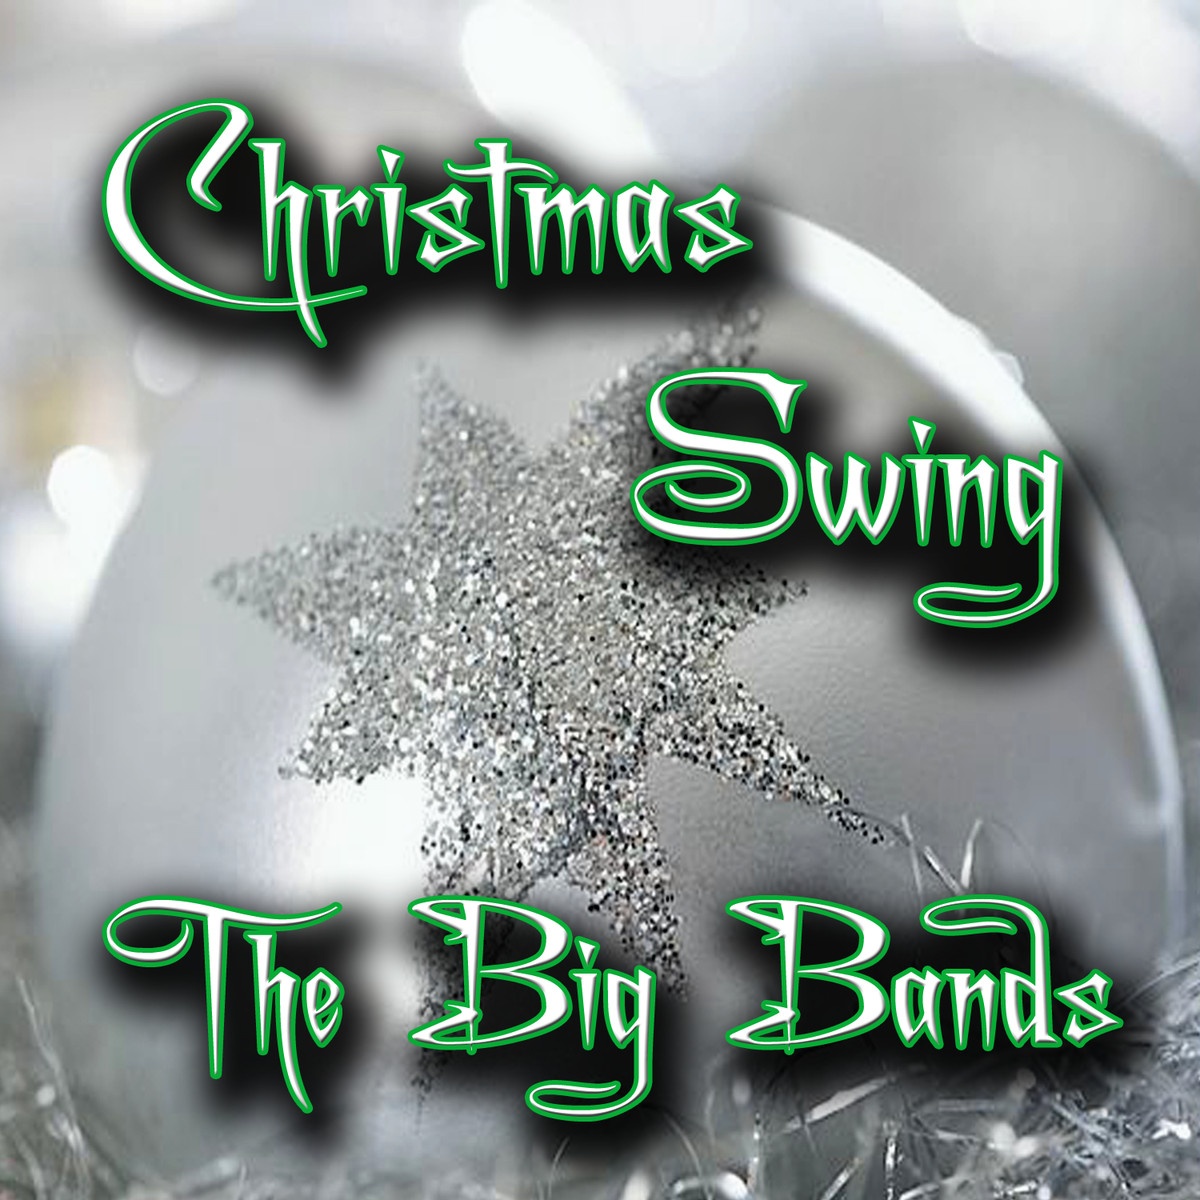 Christmas Swing